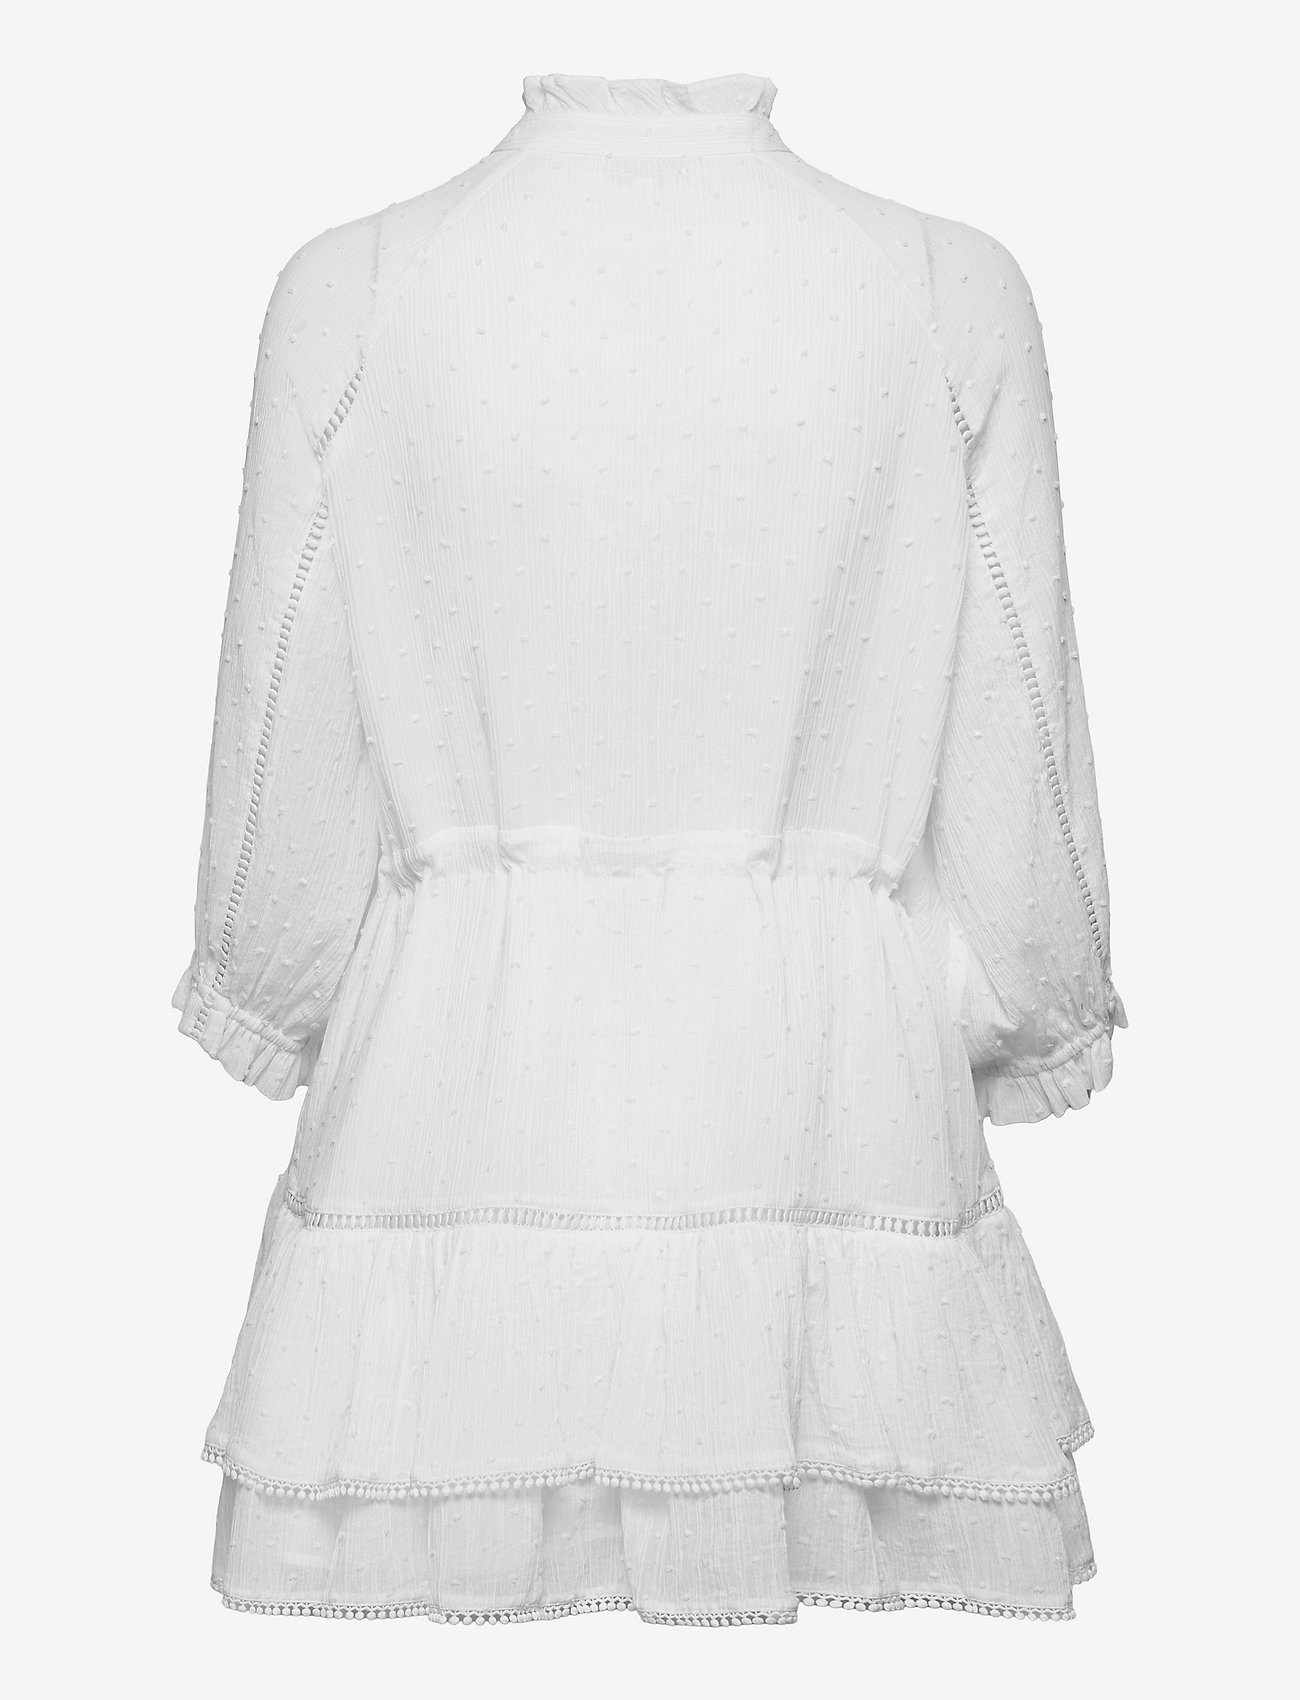 Malina - Denisa dress - short dresses - white - 1